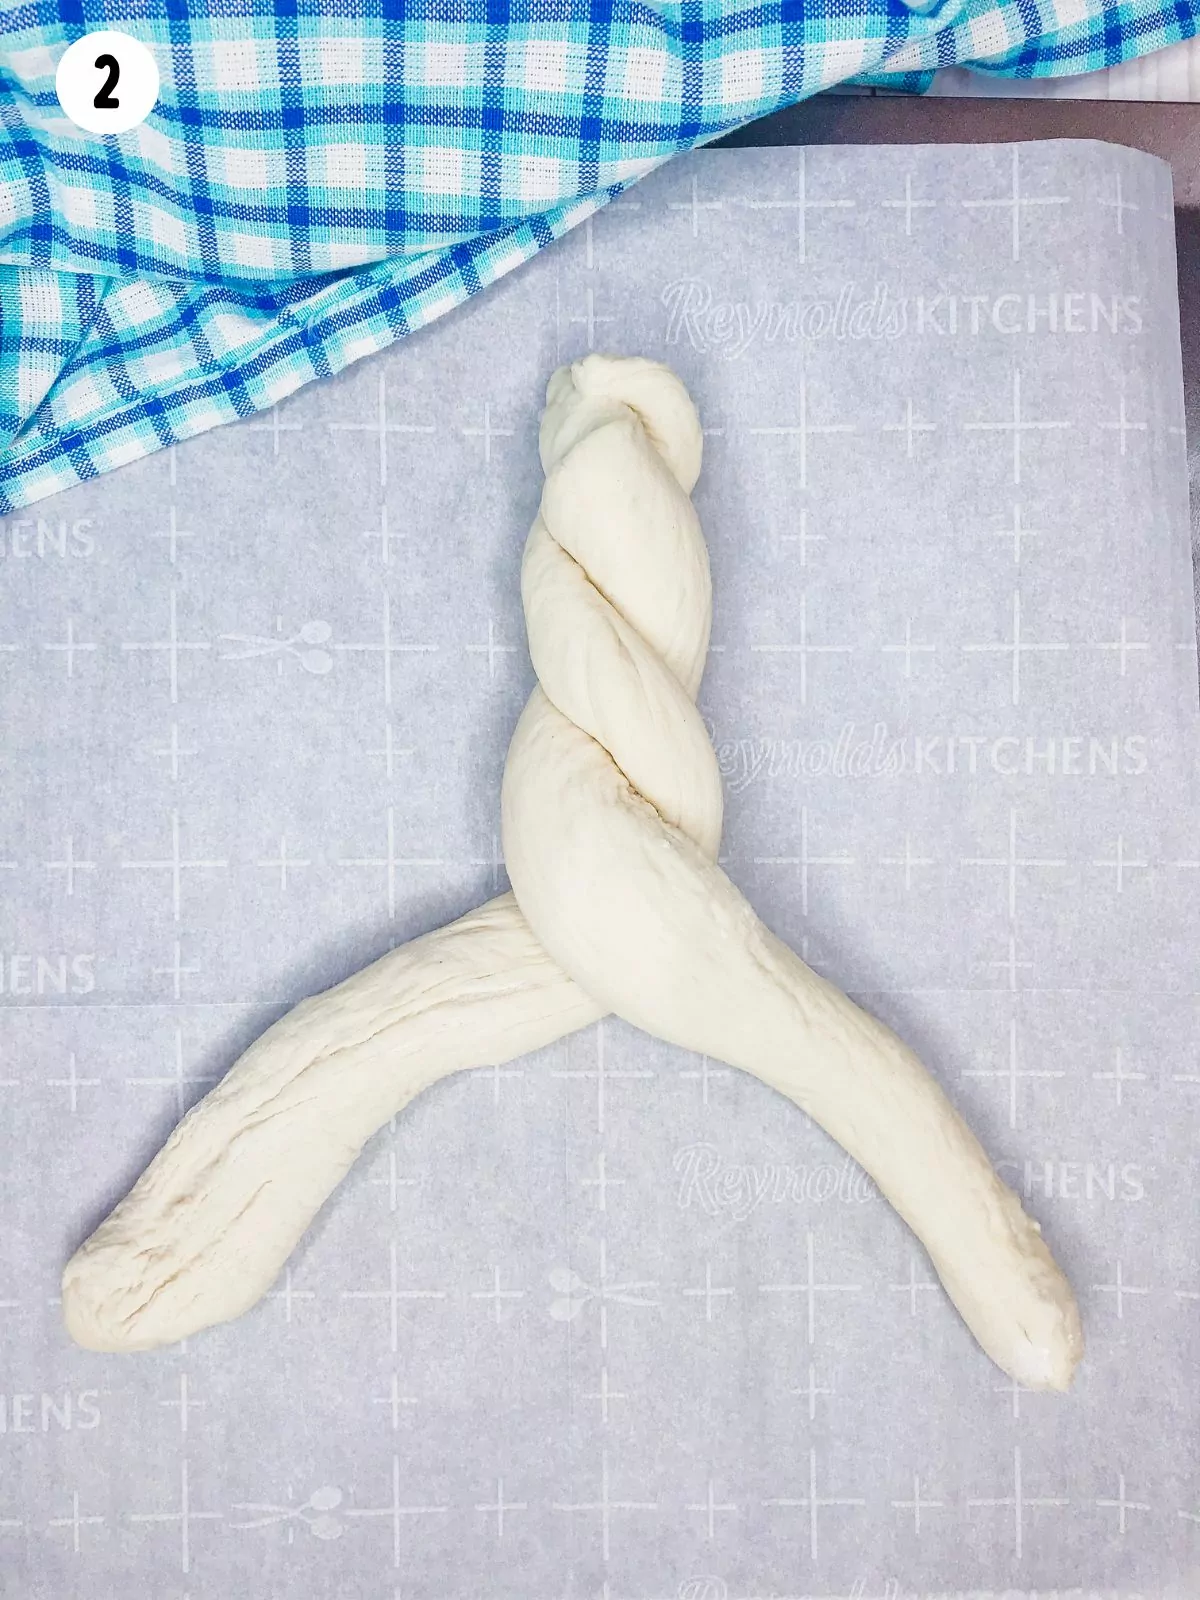 twisted bread dough.